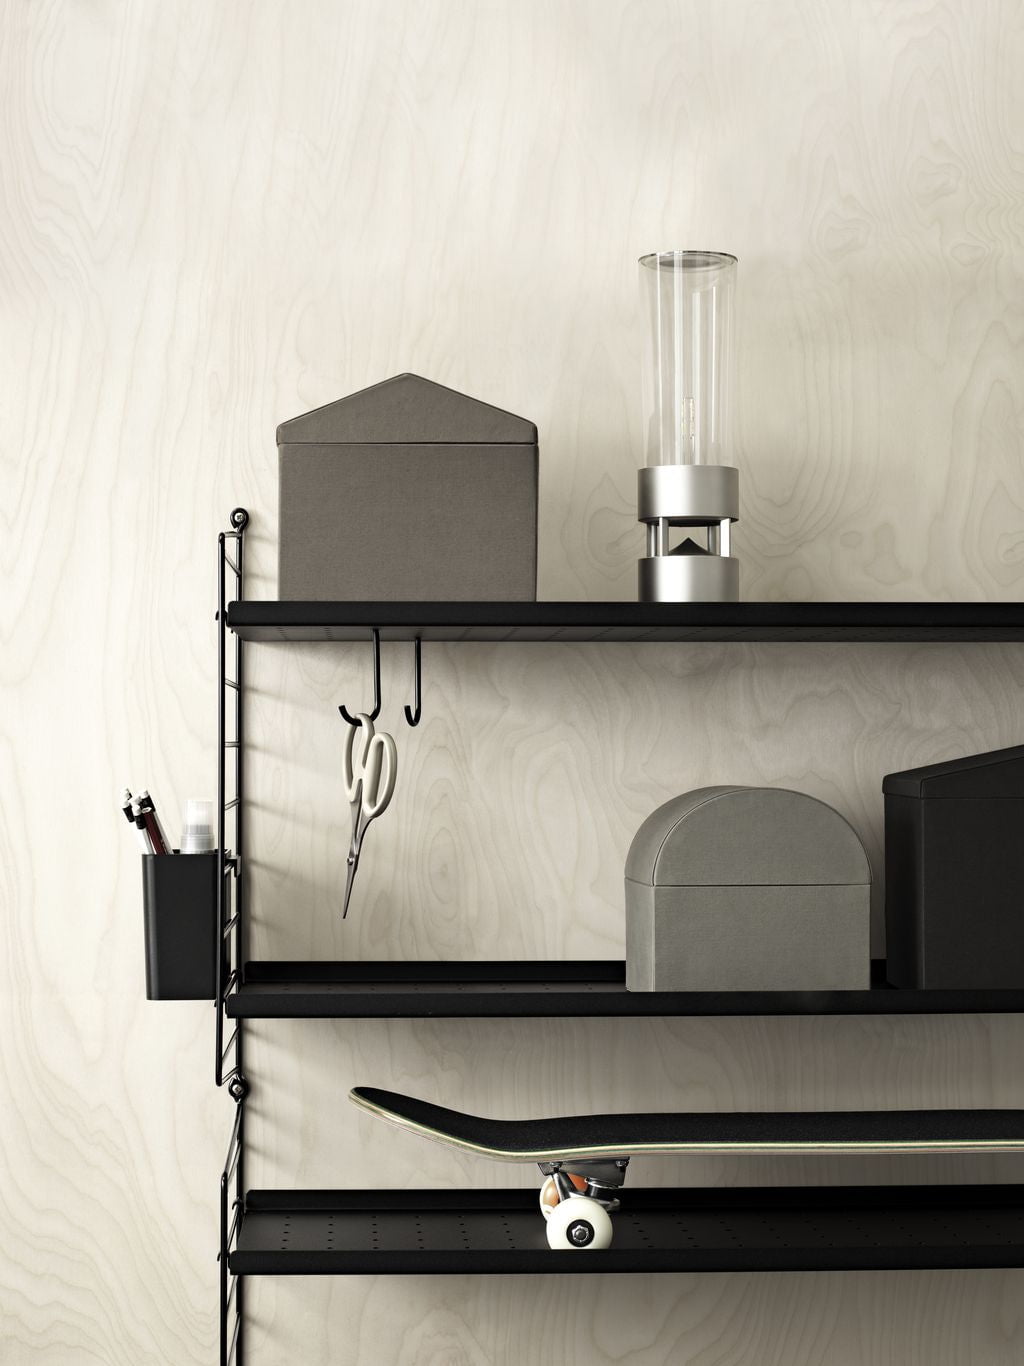 String Furniture String System Metal Shelf With Low Edge 30x58 Cm, Black